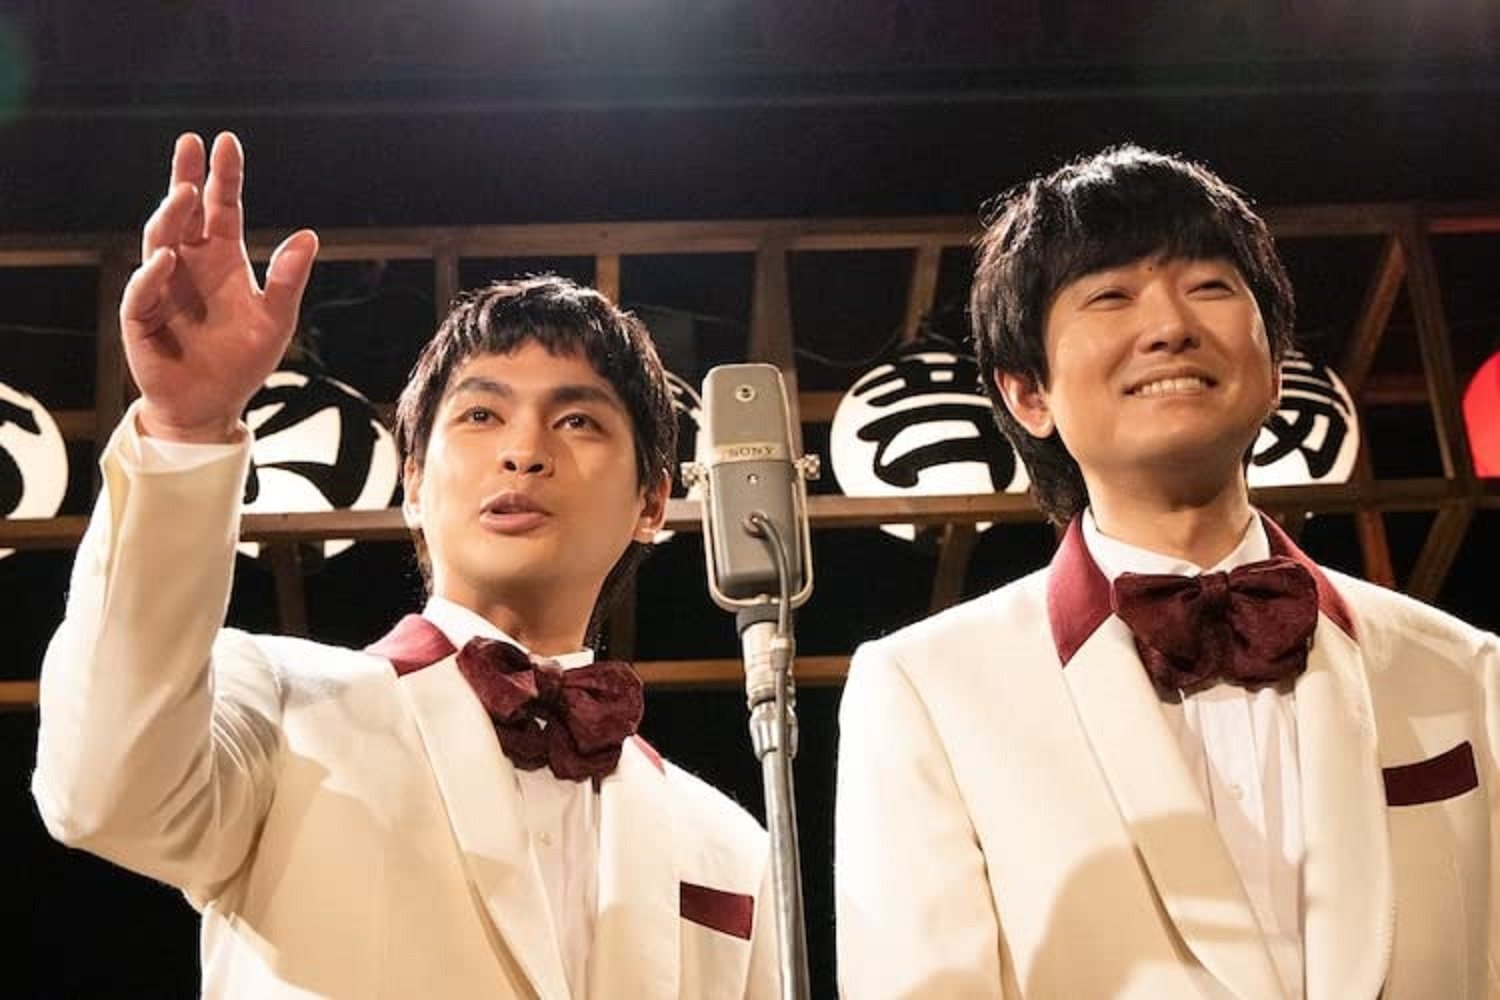 Yuya Yagira (left) plays the comedian and filmmaker Takeshi Kitano in the film Asakusa Kid.